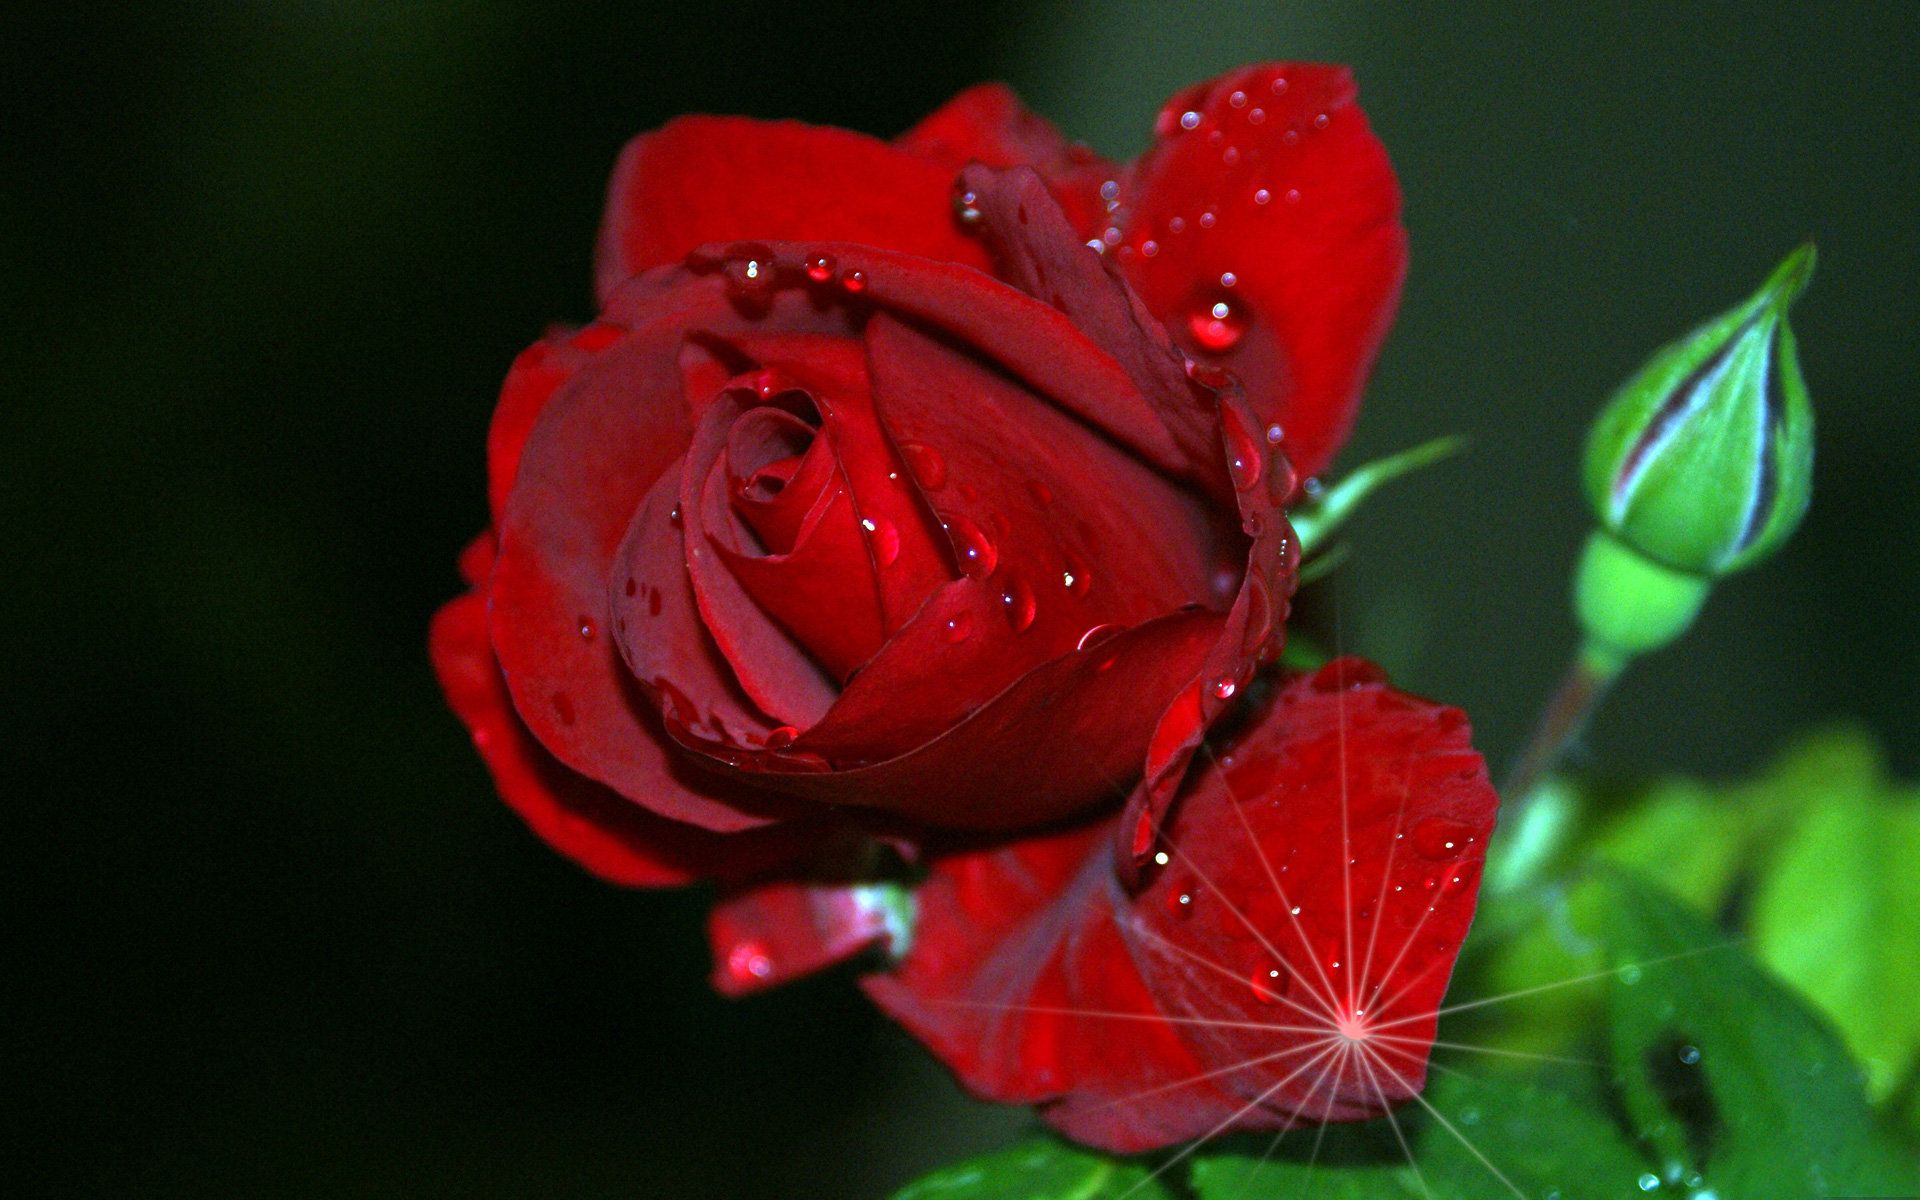 Very beautiful rose image